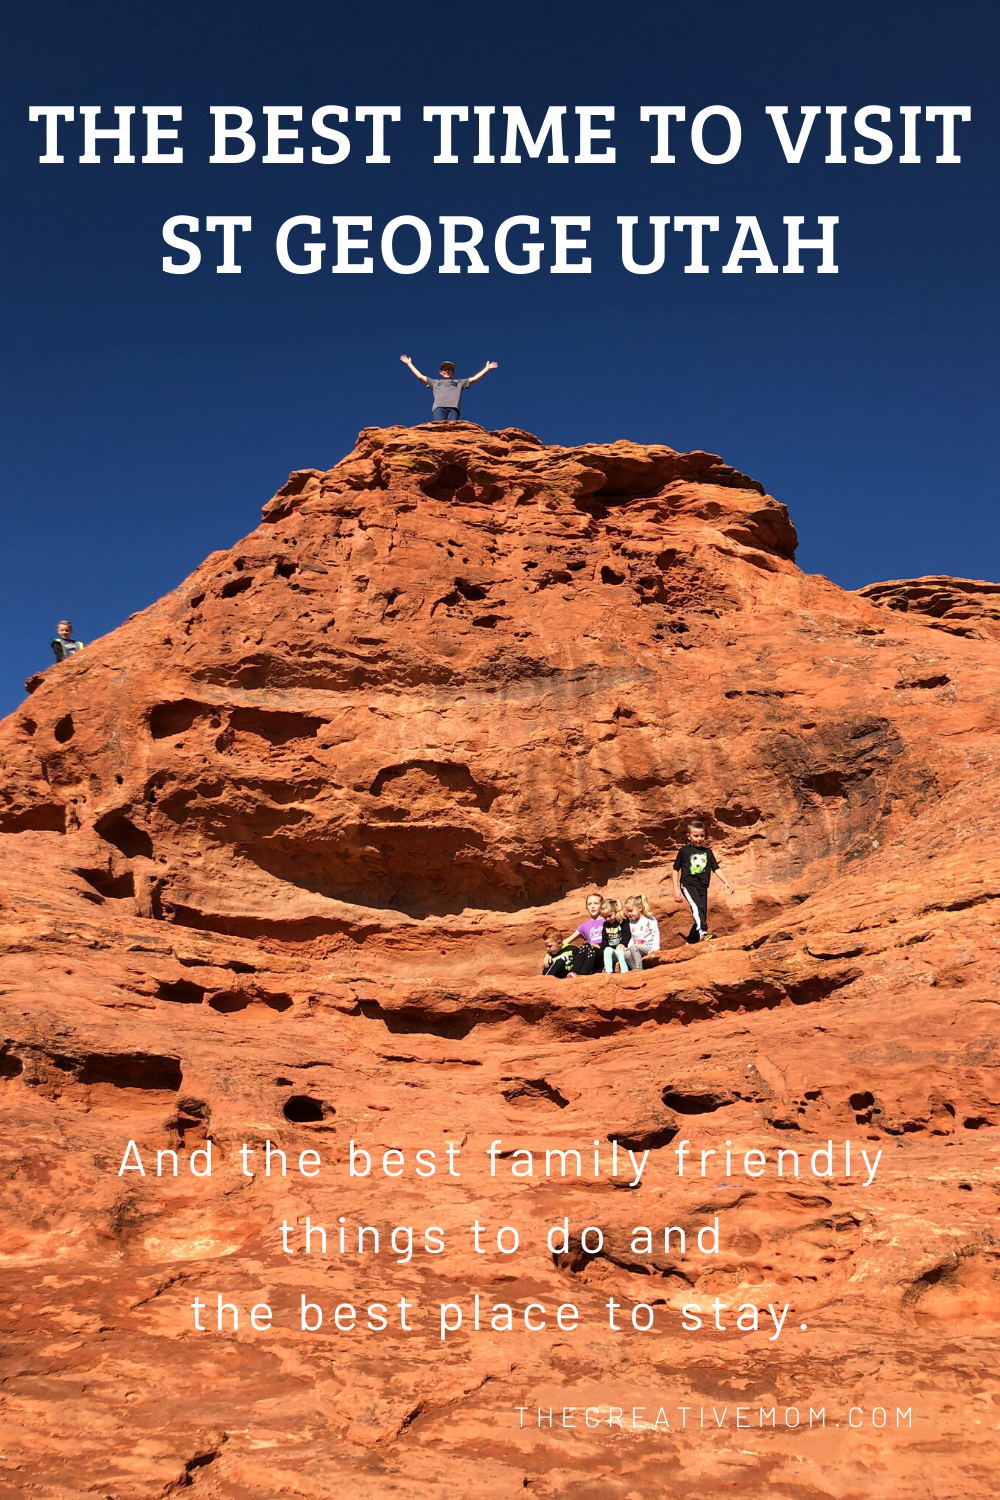 The Best Time to Visit St George Utah